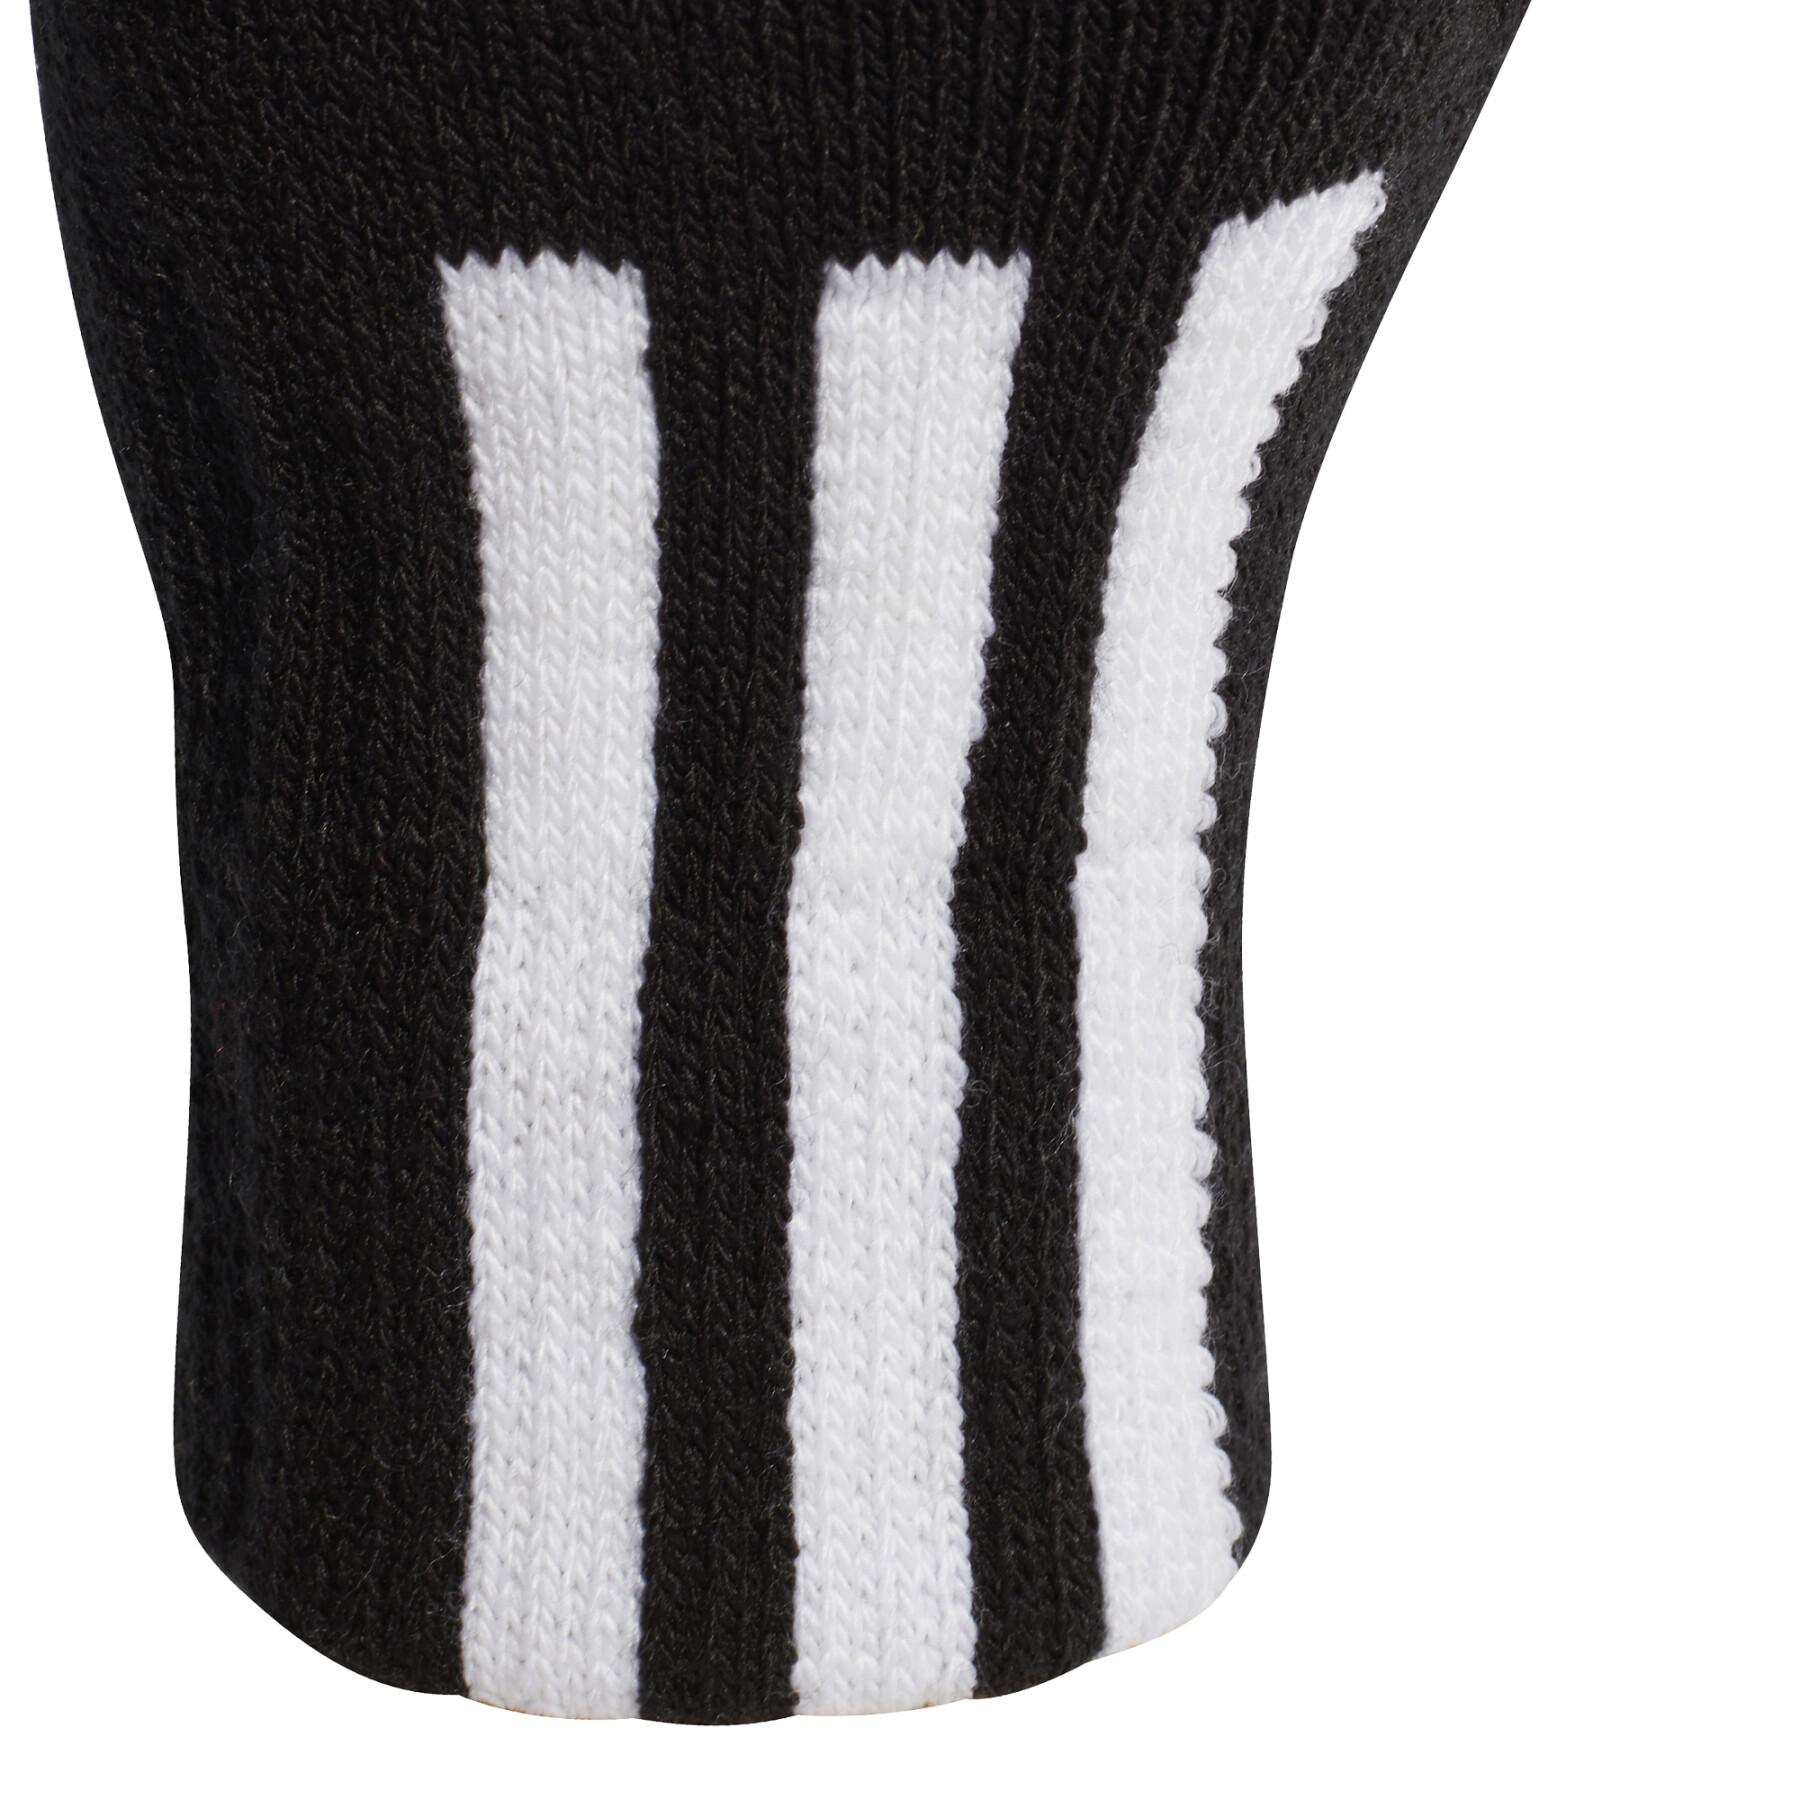 Gloves adidas 3-Stripes Conductive